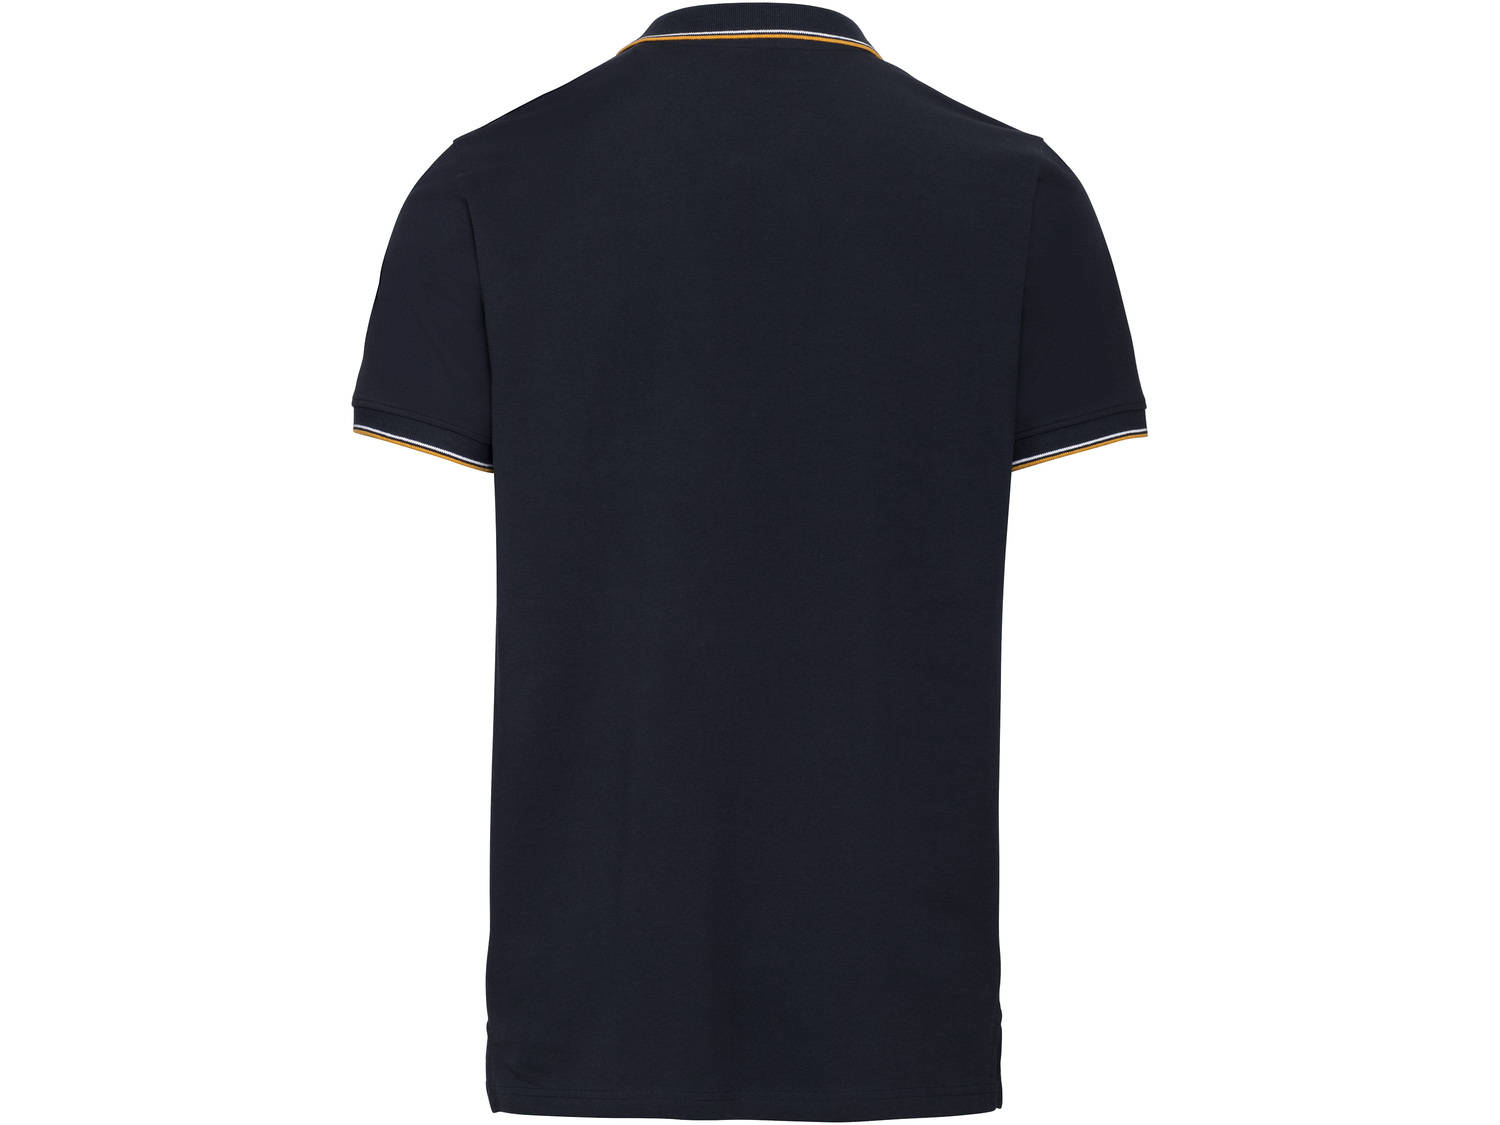 Koszulka męska polo Livergy, cena 29,99 PLN 
- 100% bawełny
- rozmiary: M-XL
- ...